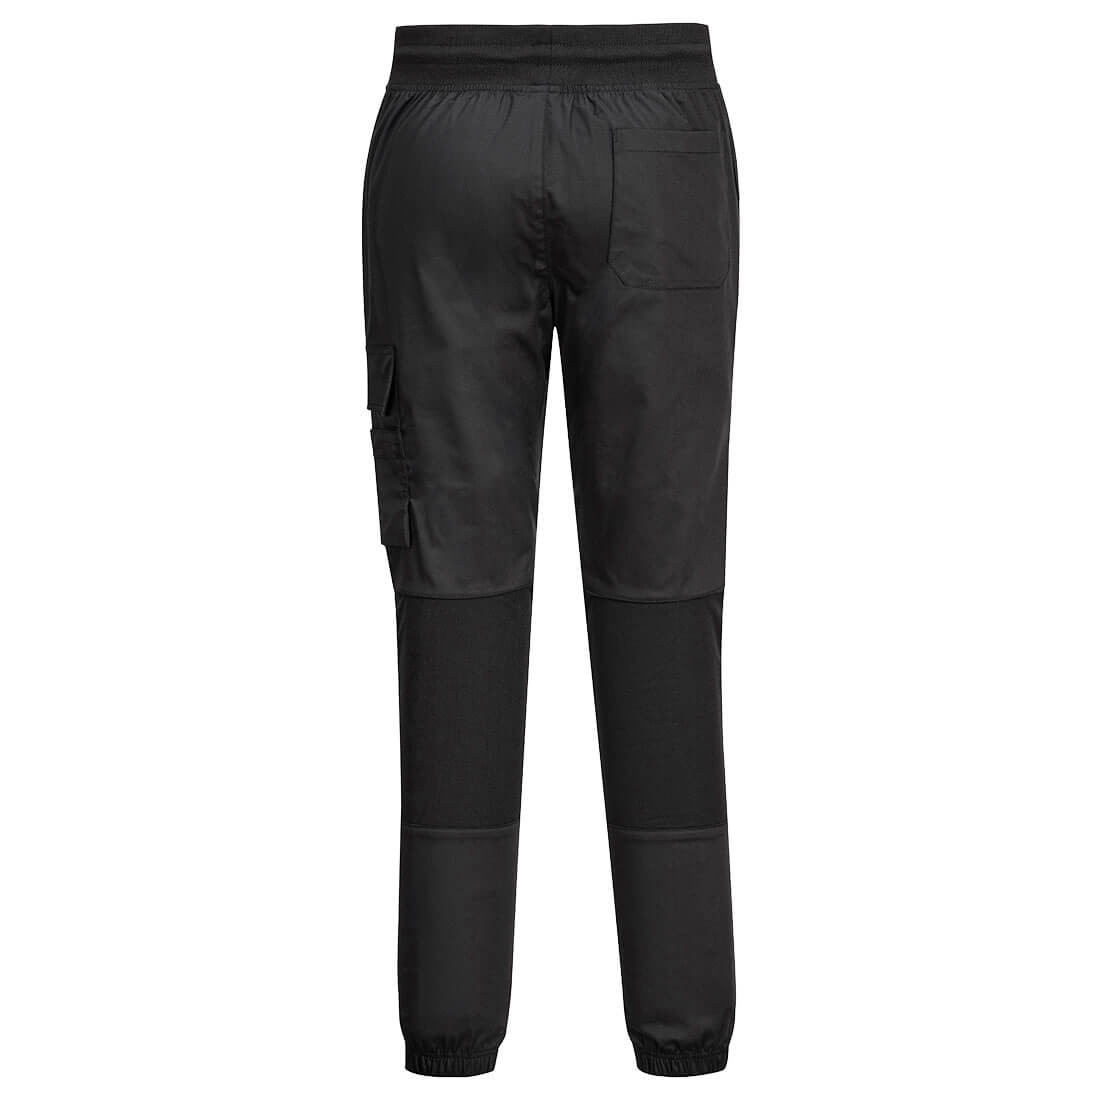 Pantaloni bucatar Jogger elastici - Imbracaminte de protectie